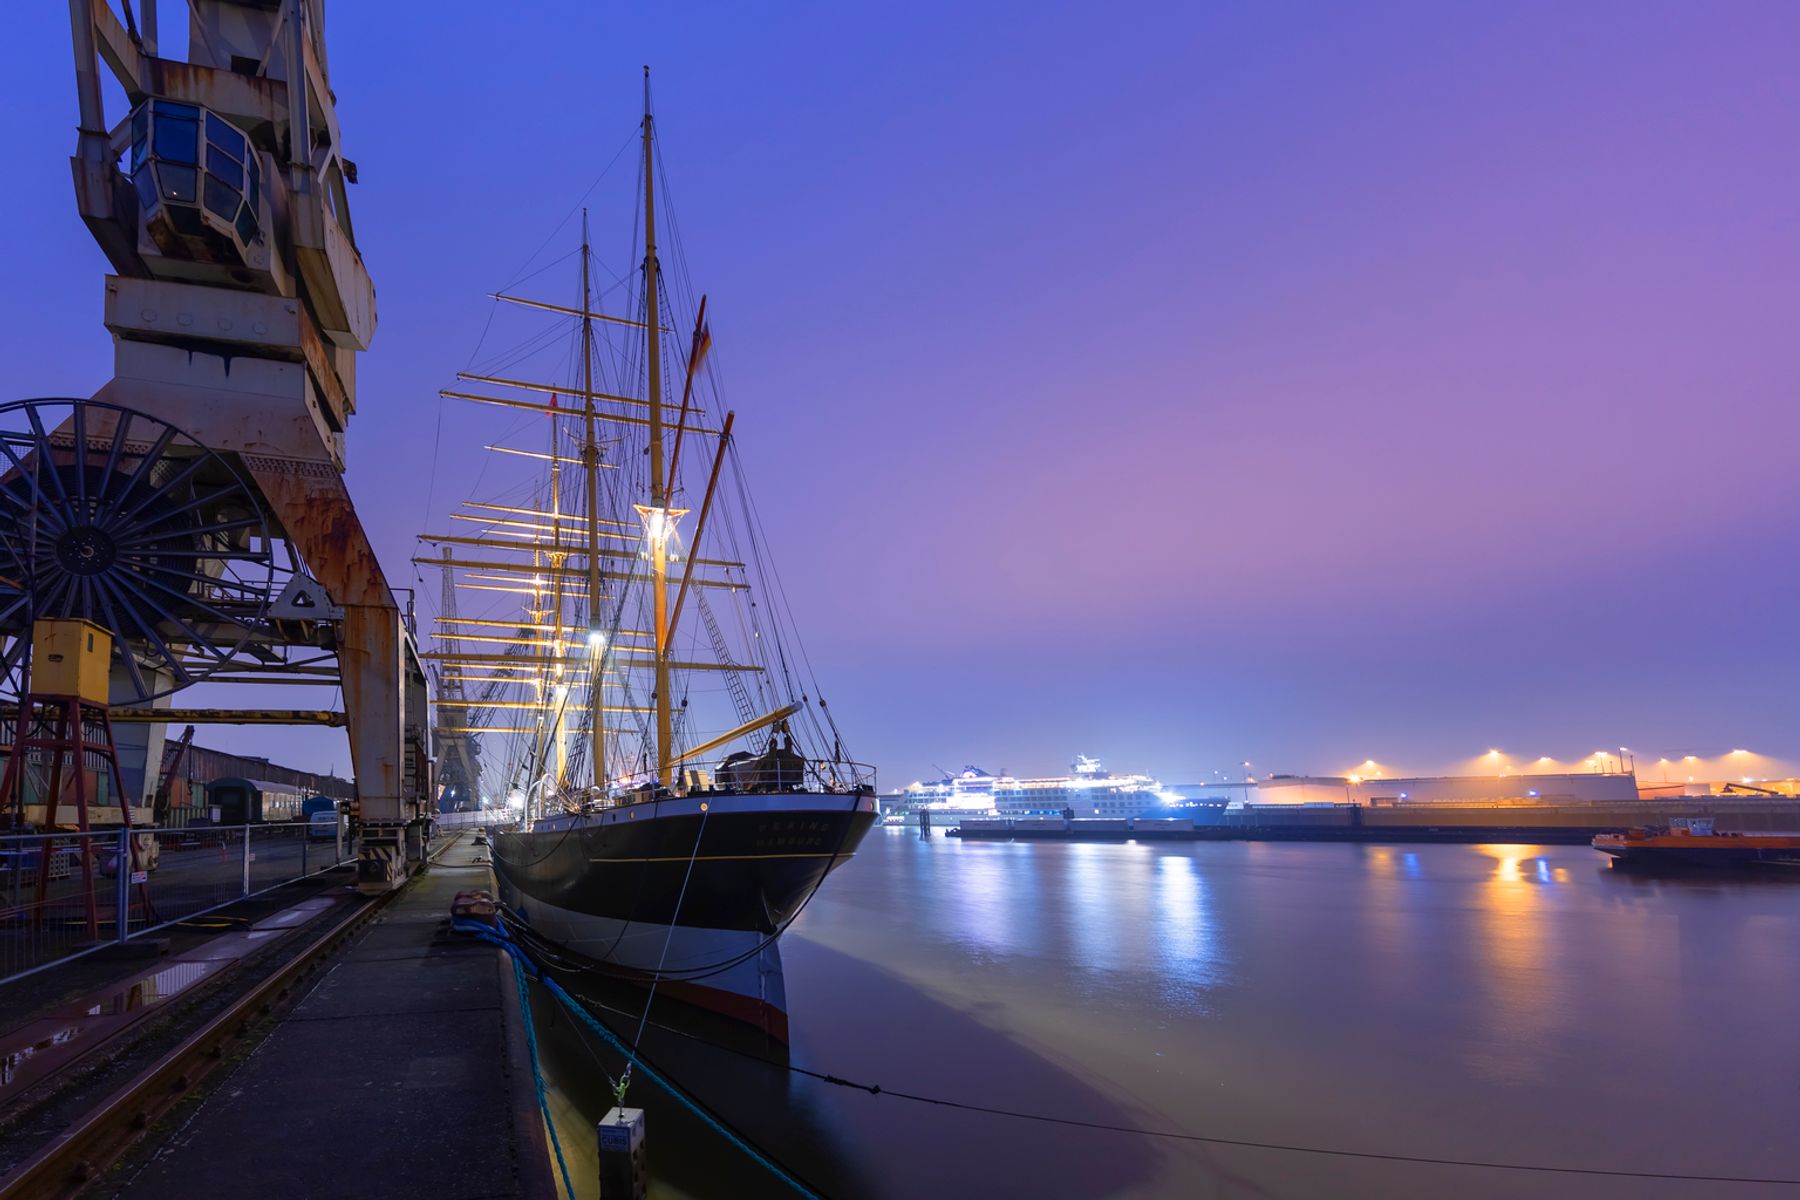 Peking sailing ship, Hamburg. Photography: Frieder Blickle, Hamburg.